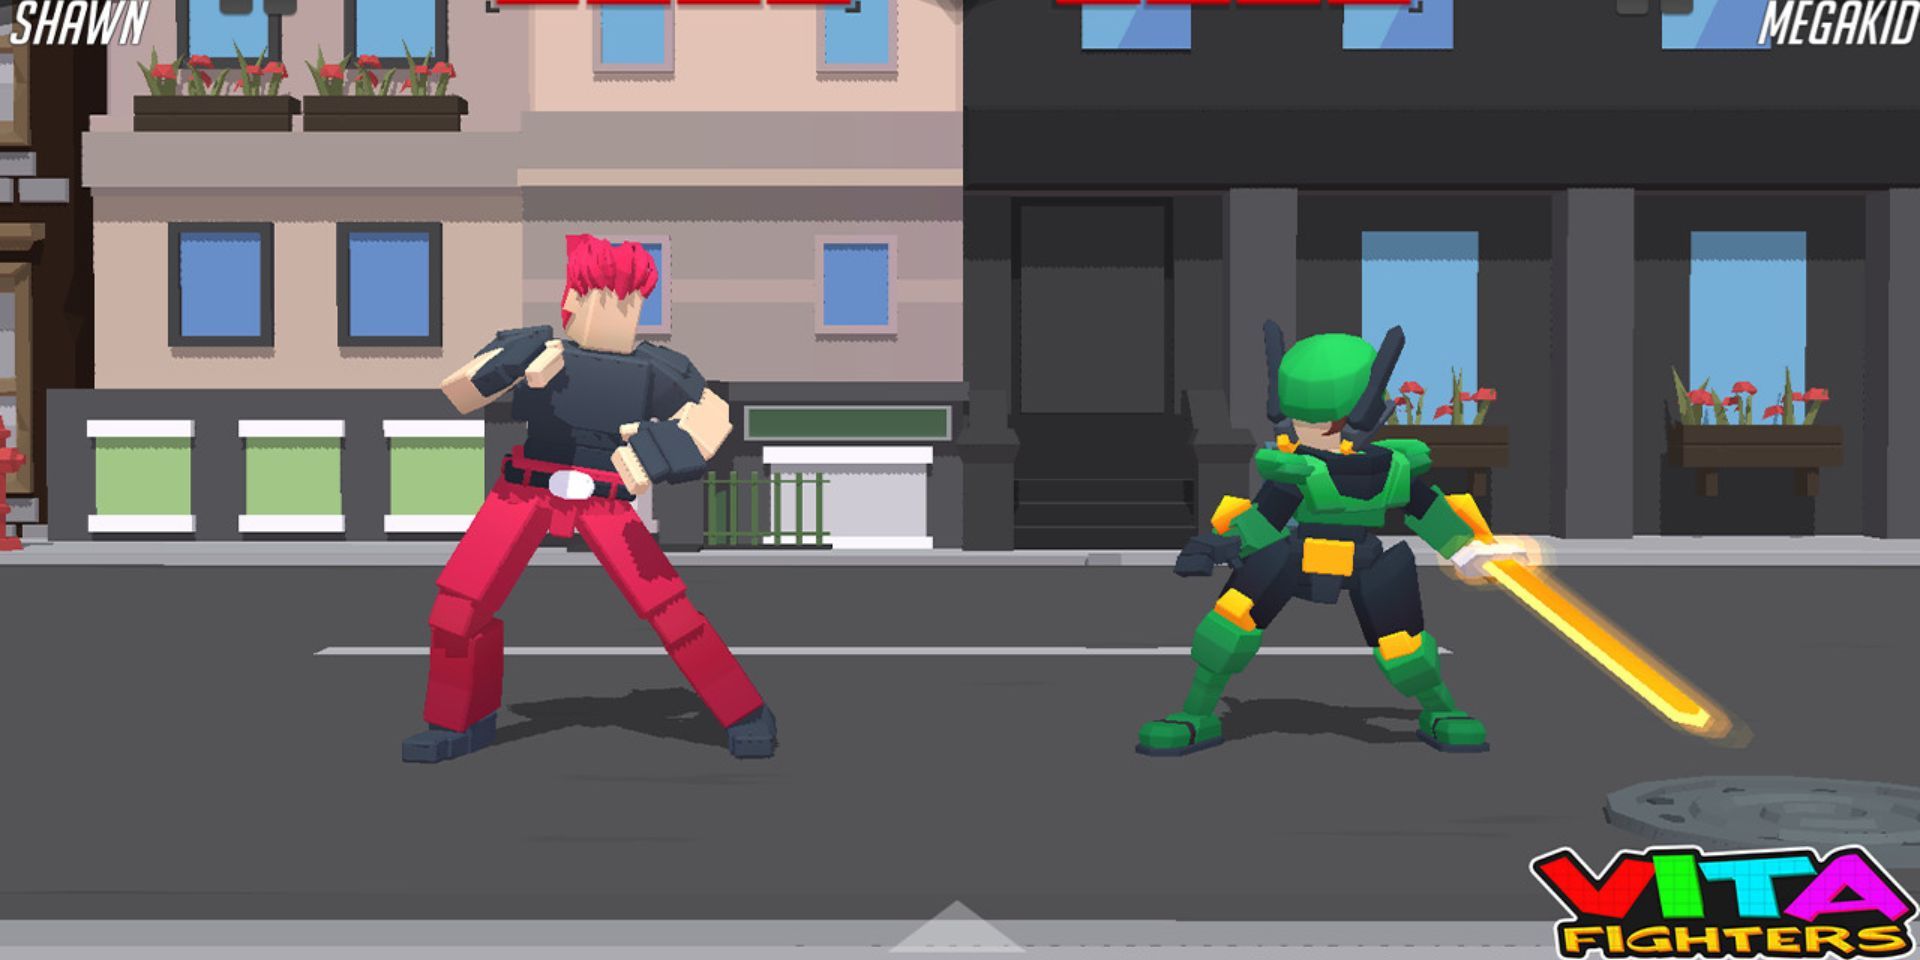 A screenshot from Vita Fighters